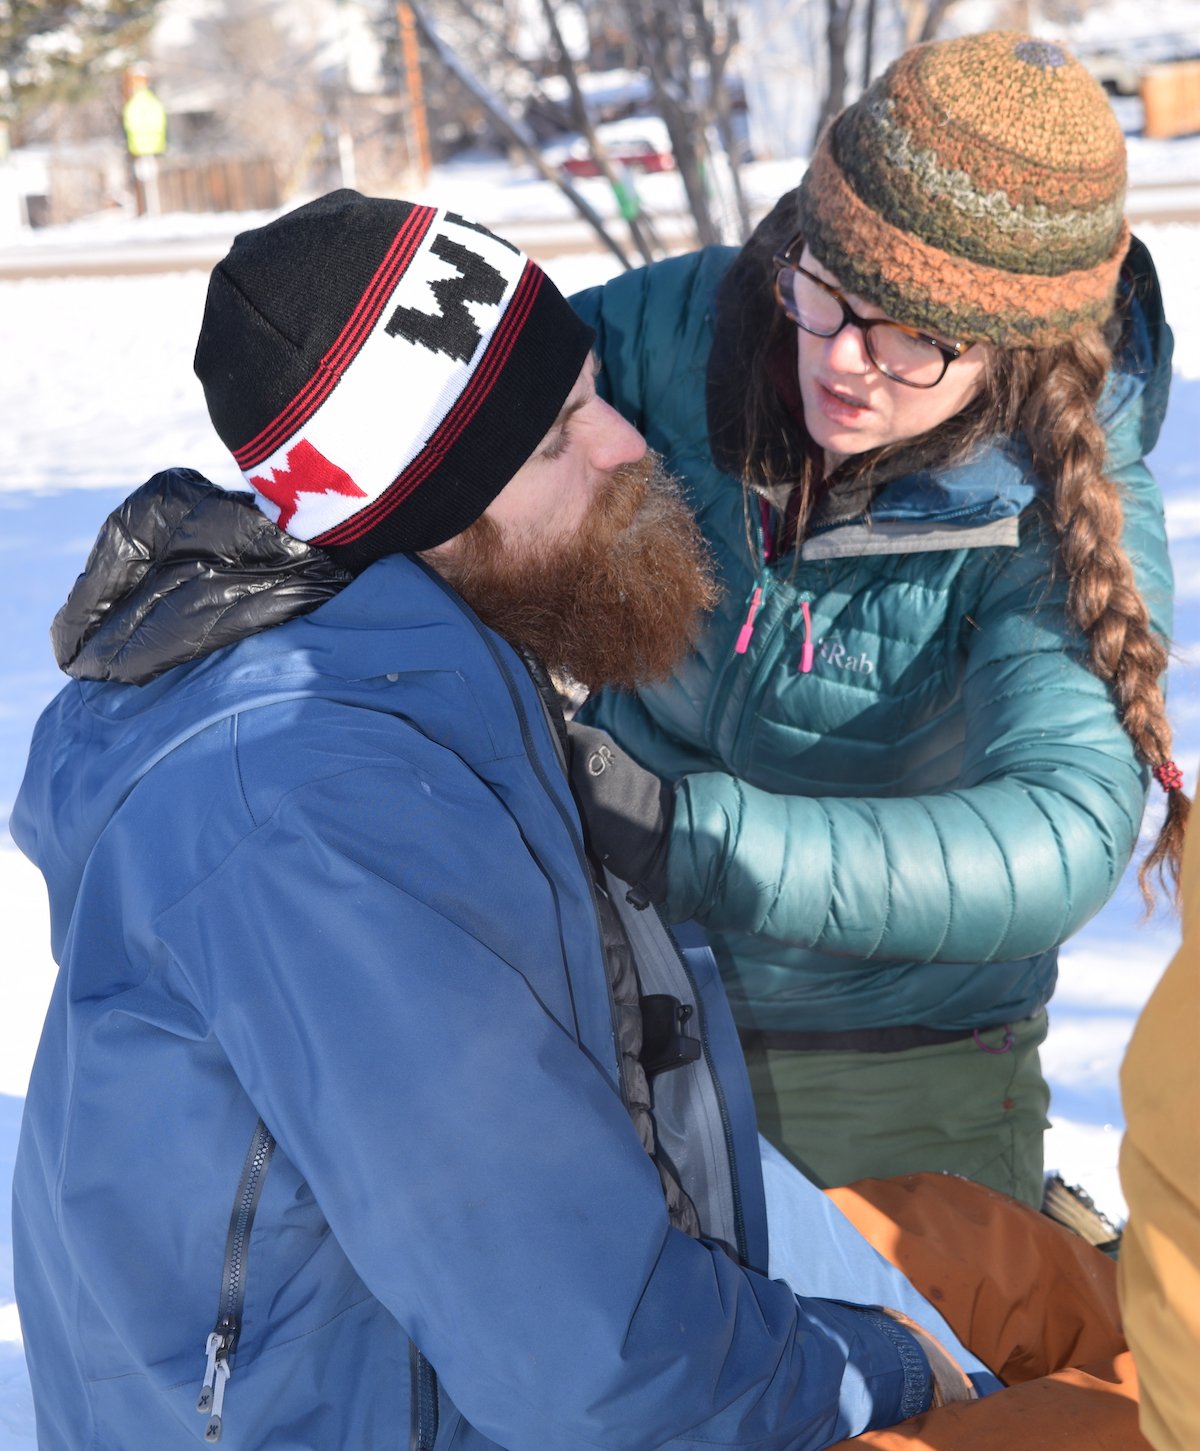 NOLS wilderness medicine students wearing winter gear practice taking a pulse